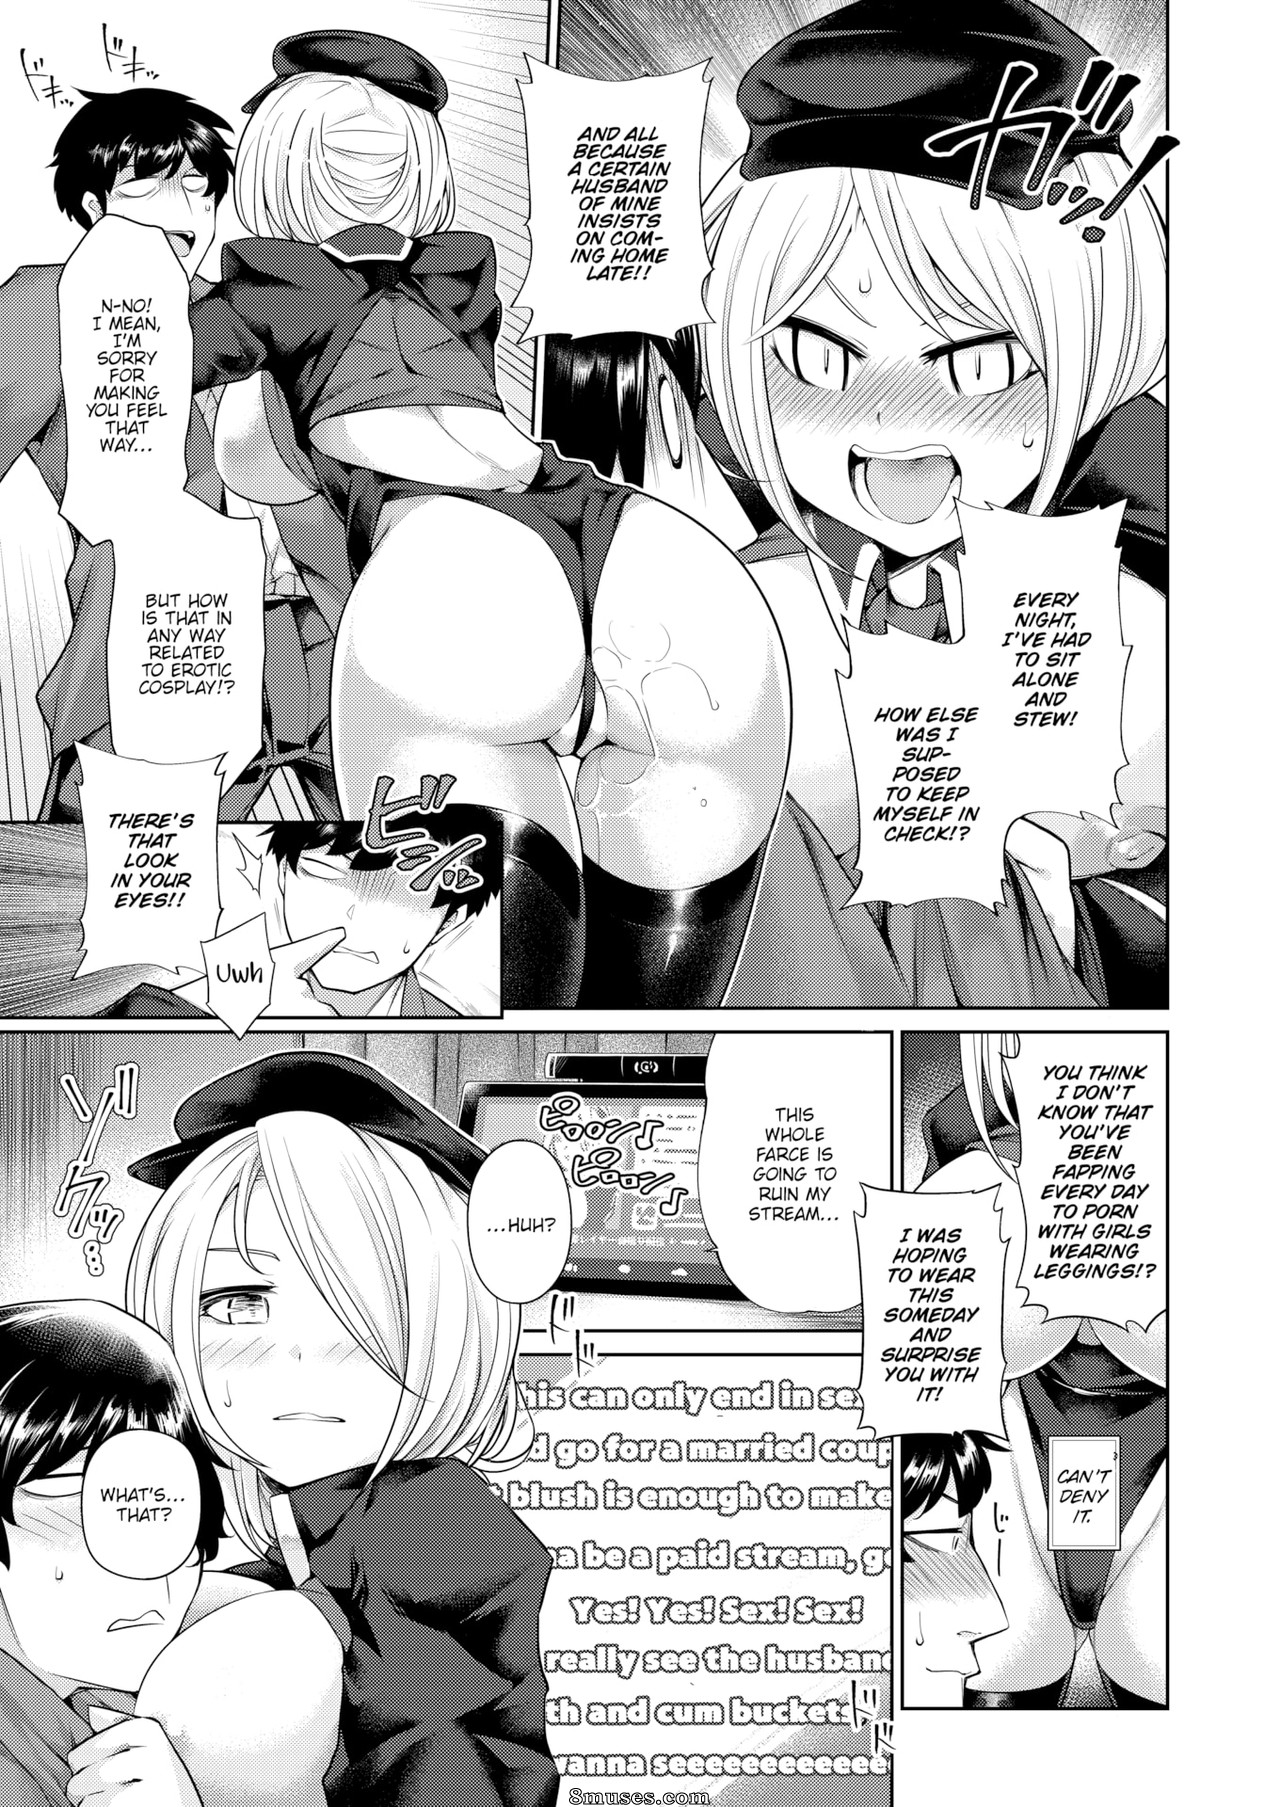 Page 9 Fakku-Comics/Satozaki/Slacker-Brides-Secret-Circumstances 8muses 